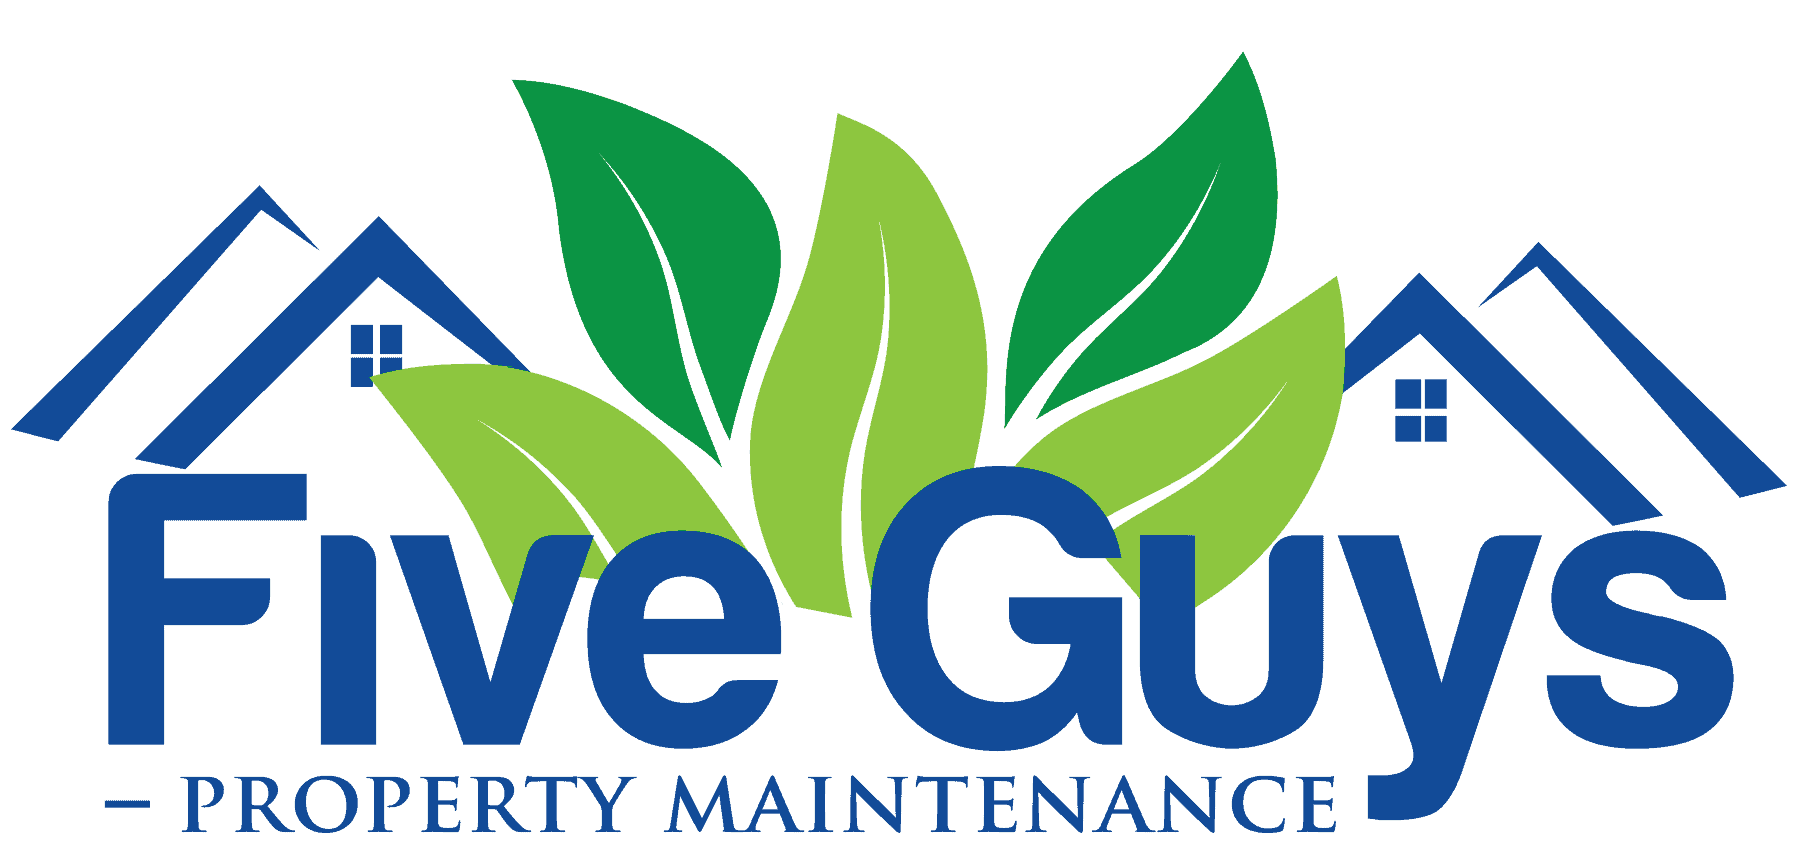 Five Guys Property Maintenance Logo